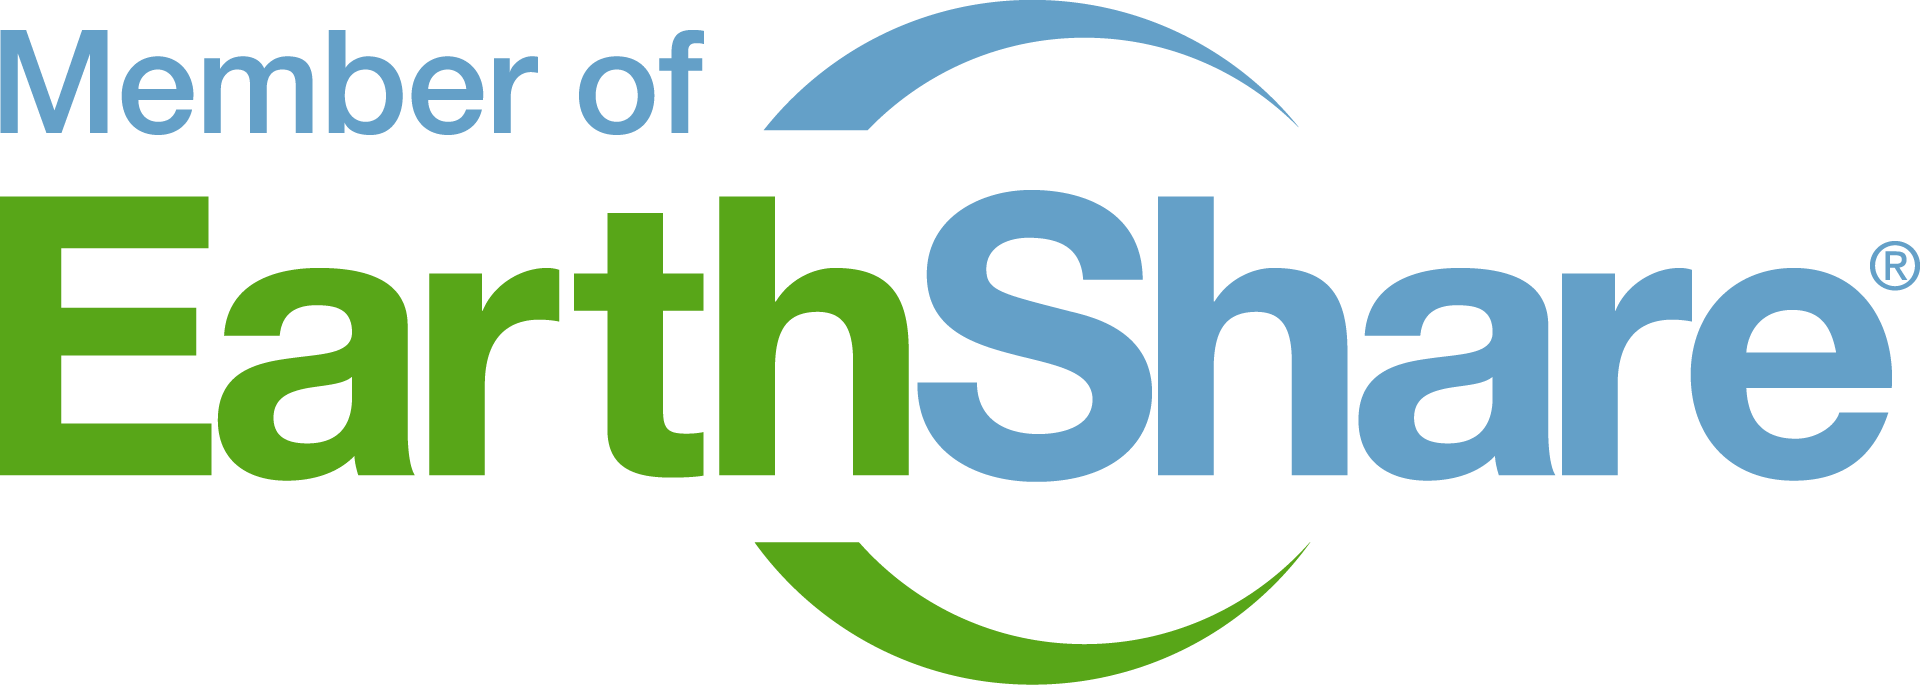 EarthShare membership badge